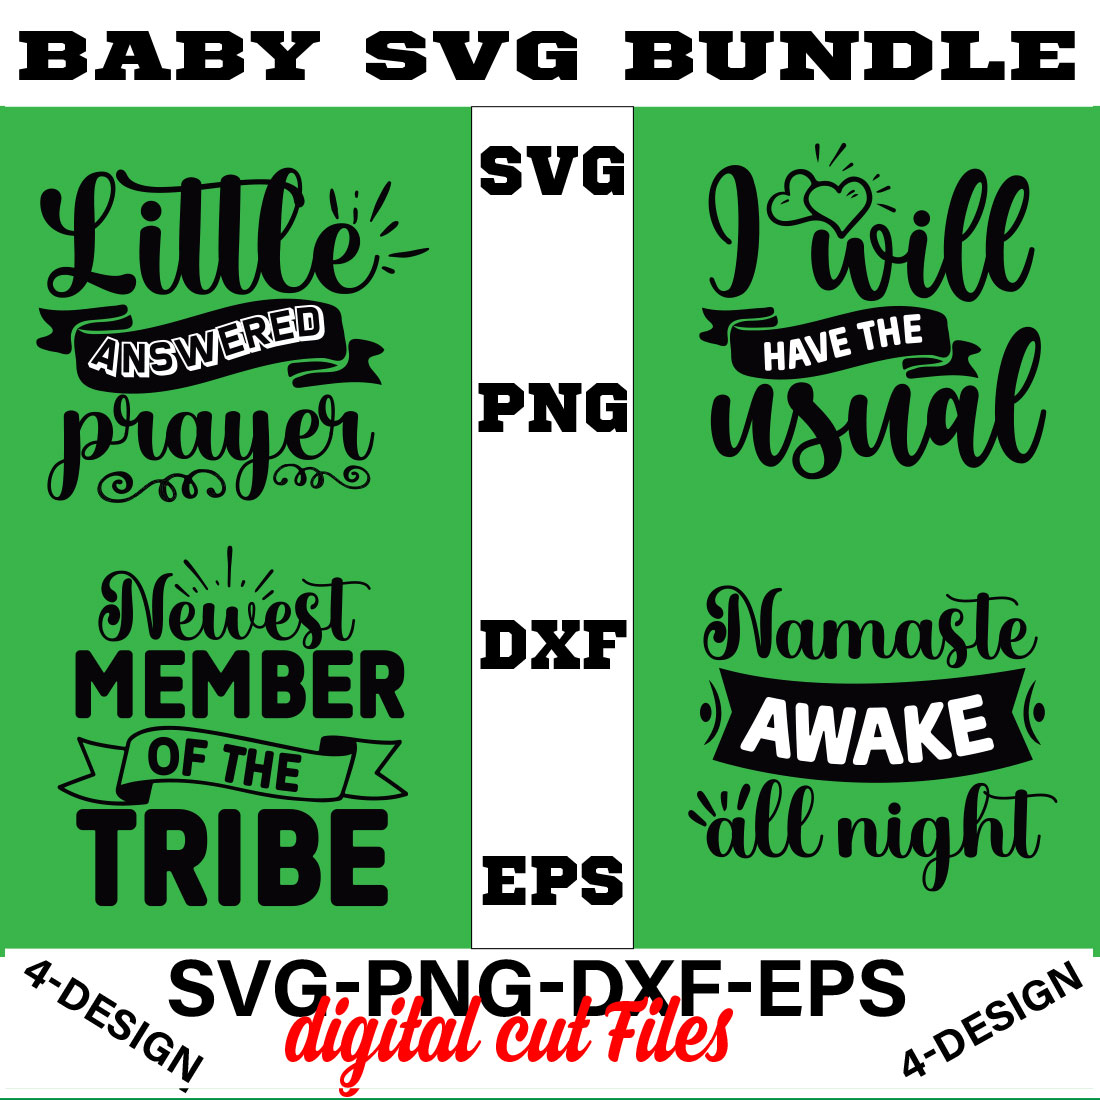 Baby SVG Bundle, Baby Shower SVG, Newborn SVG Bundle, Baby Quote Bundle, Cute Baby Saying svg, Funny Baby svg, Baby Boy Girl Svg, Png Vol-02 cover image.